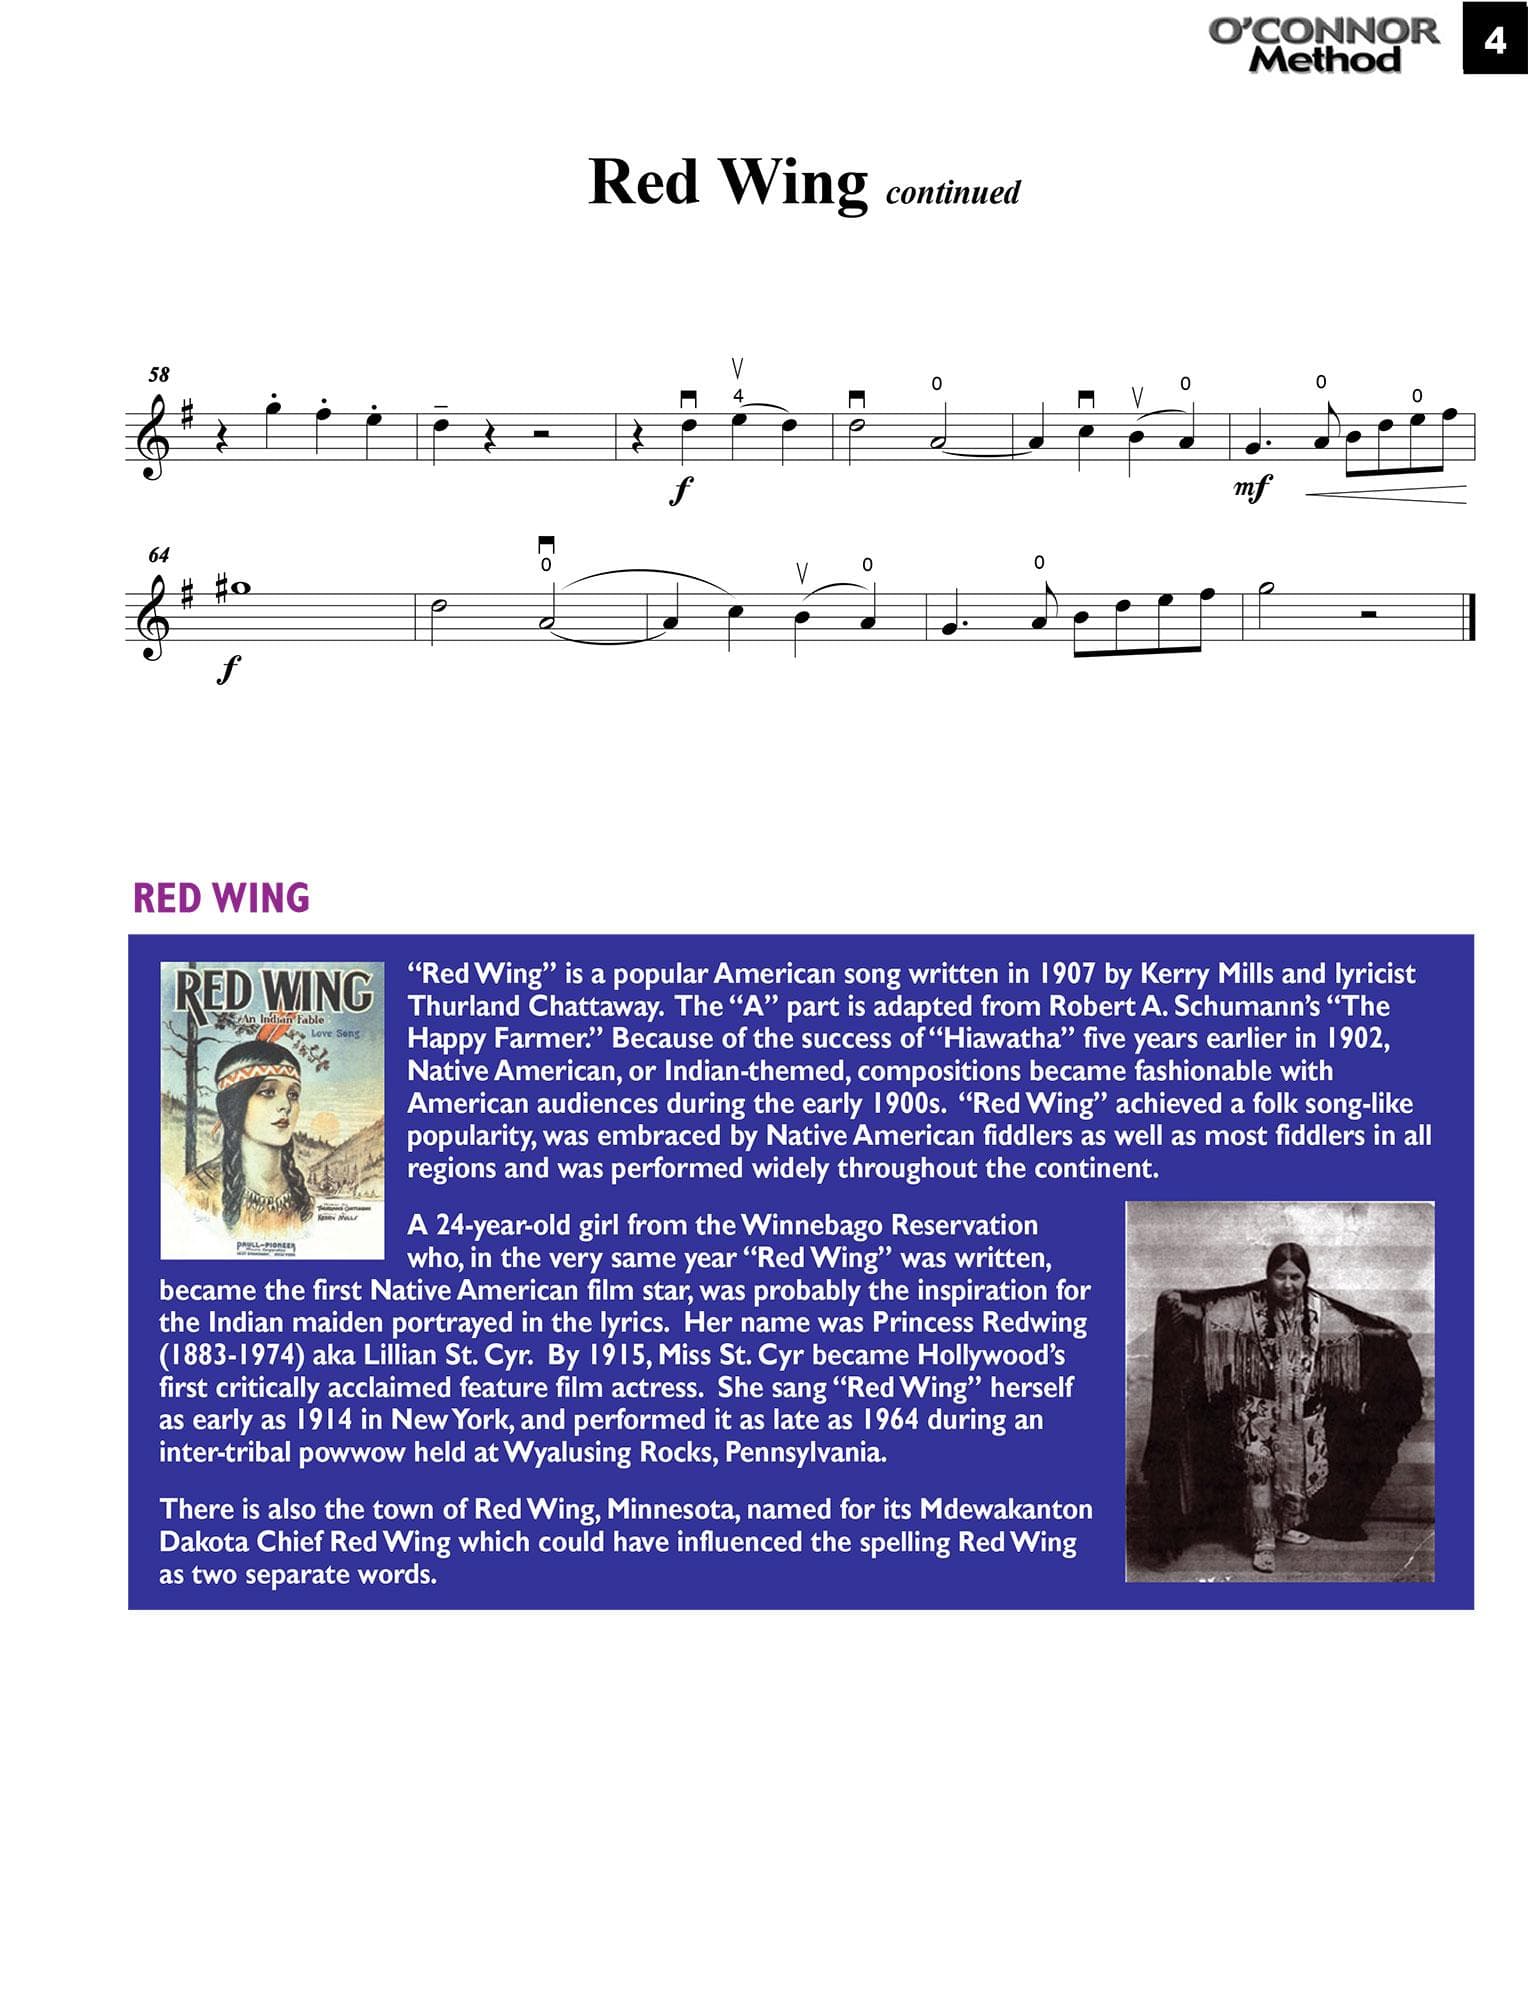 O'Connor Method for Orchestra - Book II - Violin 2 Part - Digital Download